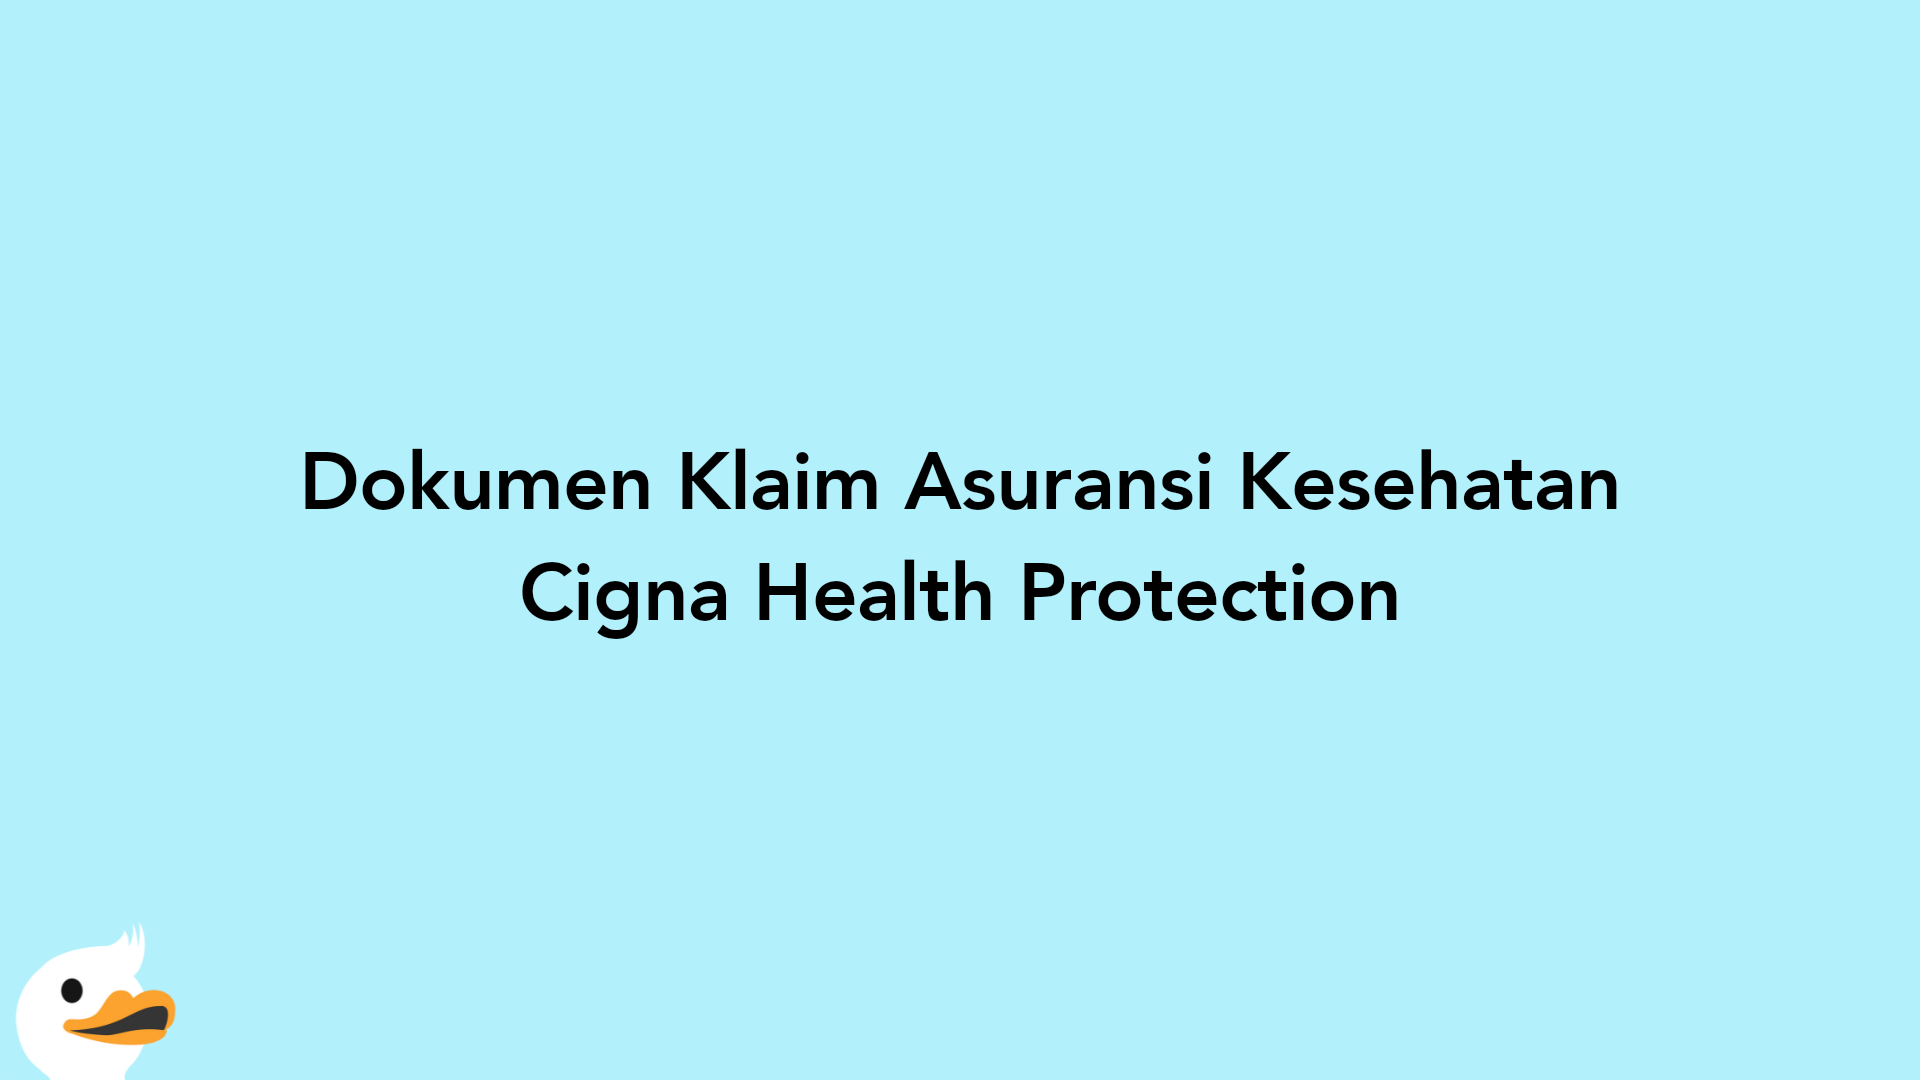 Dokumen Klaim Asuransi Kesehatan Cigna Health Protection